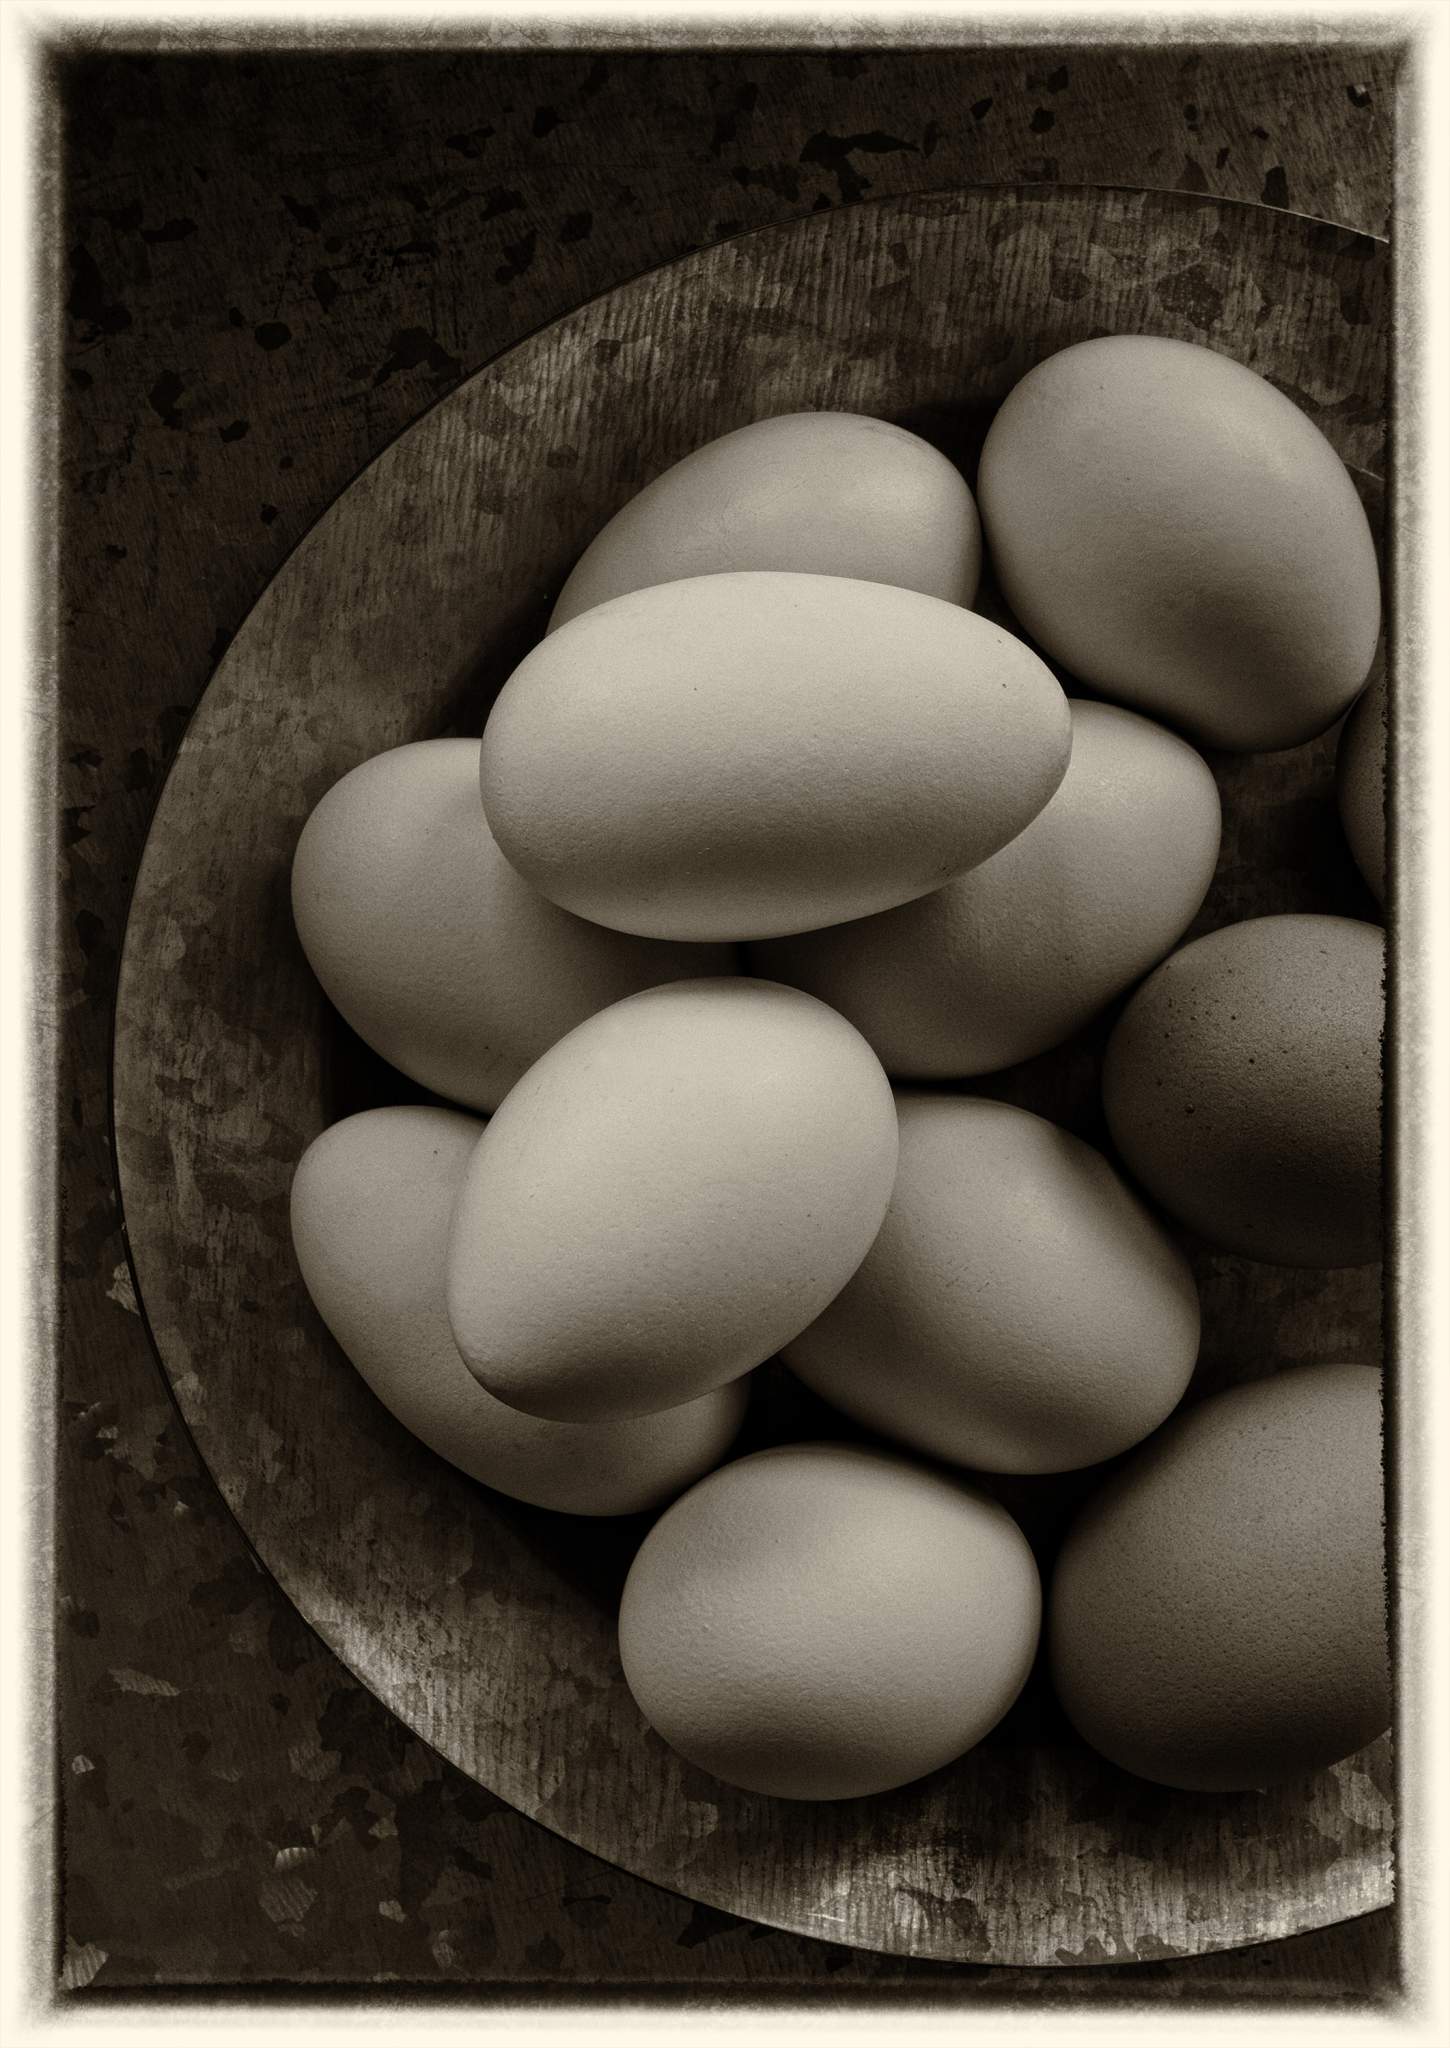 Galvanized steel with Araucana & brown eggs